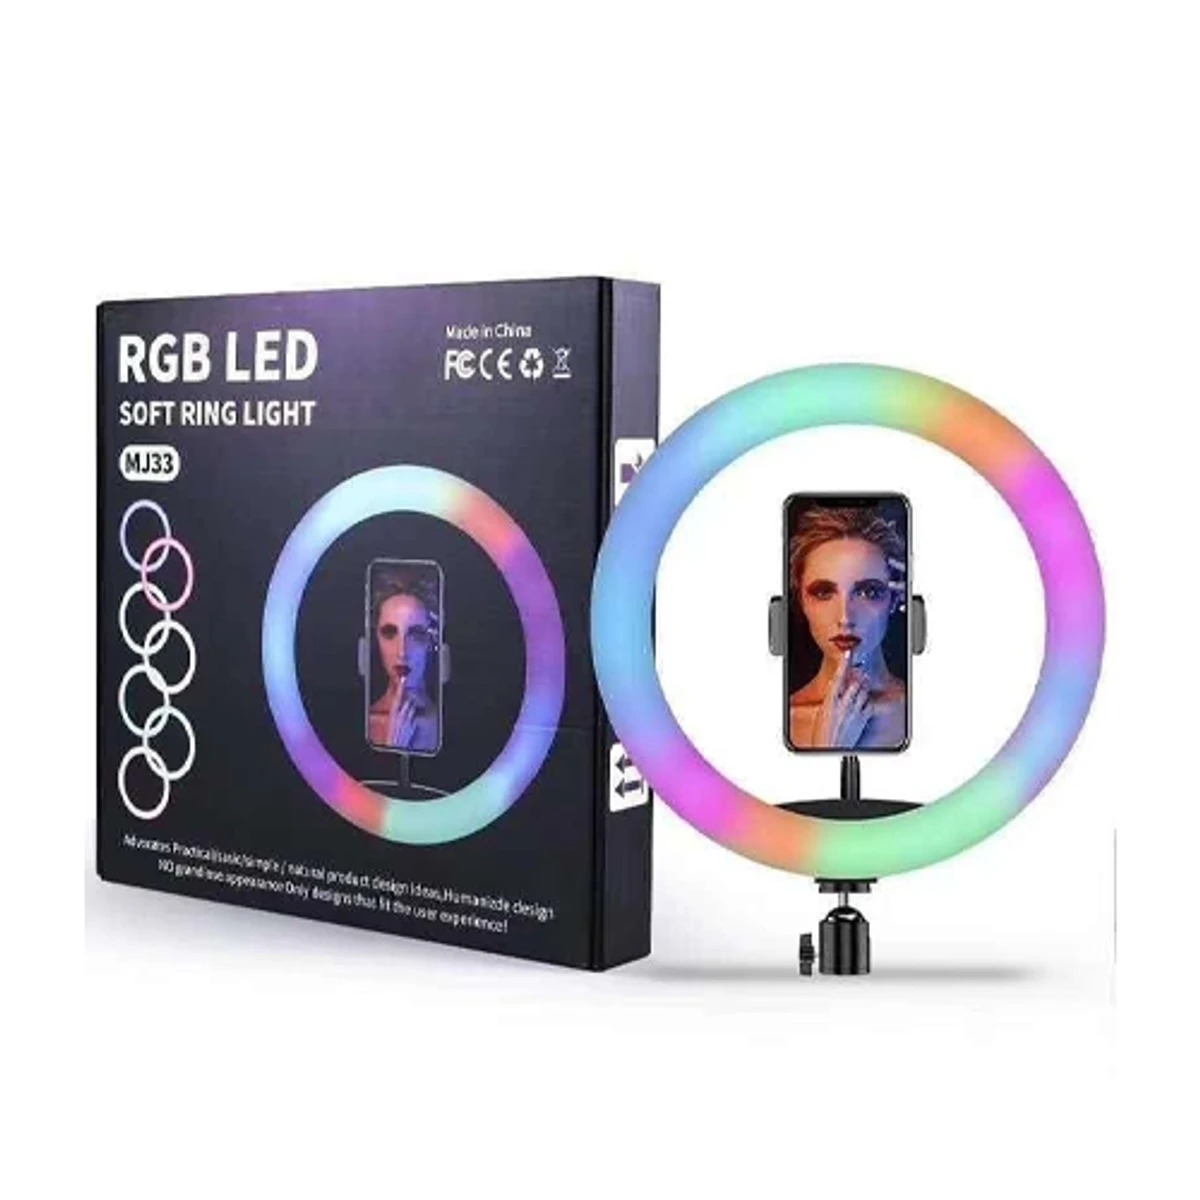 MJ33 RGB LED Soft Ring Light